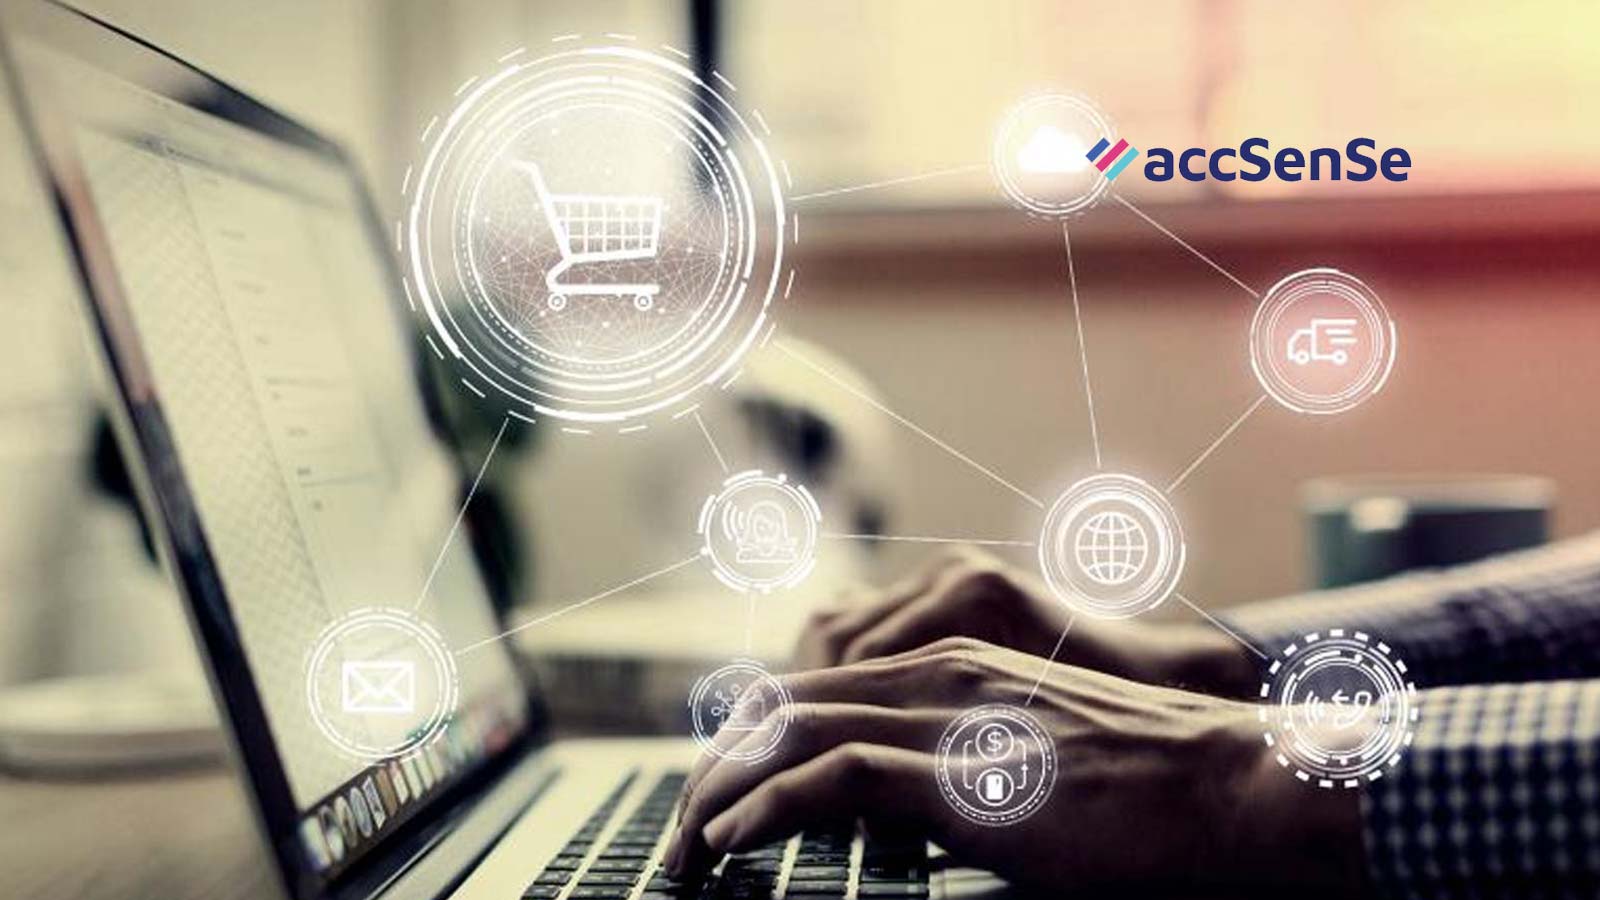 accSenSe Raises $5 Million For Continuous Access and Business Continuity Platform for IAM Solutions